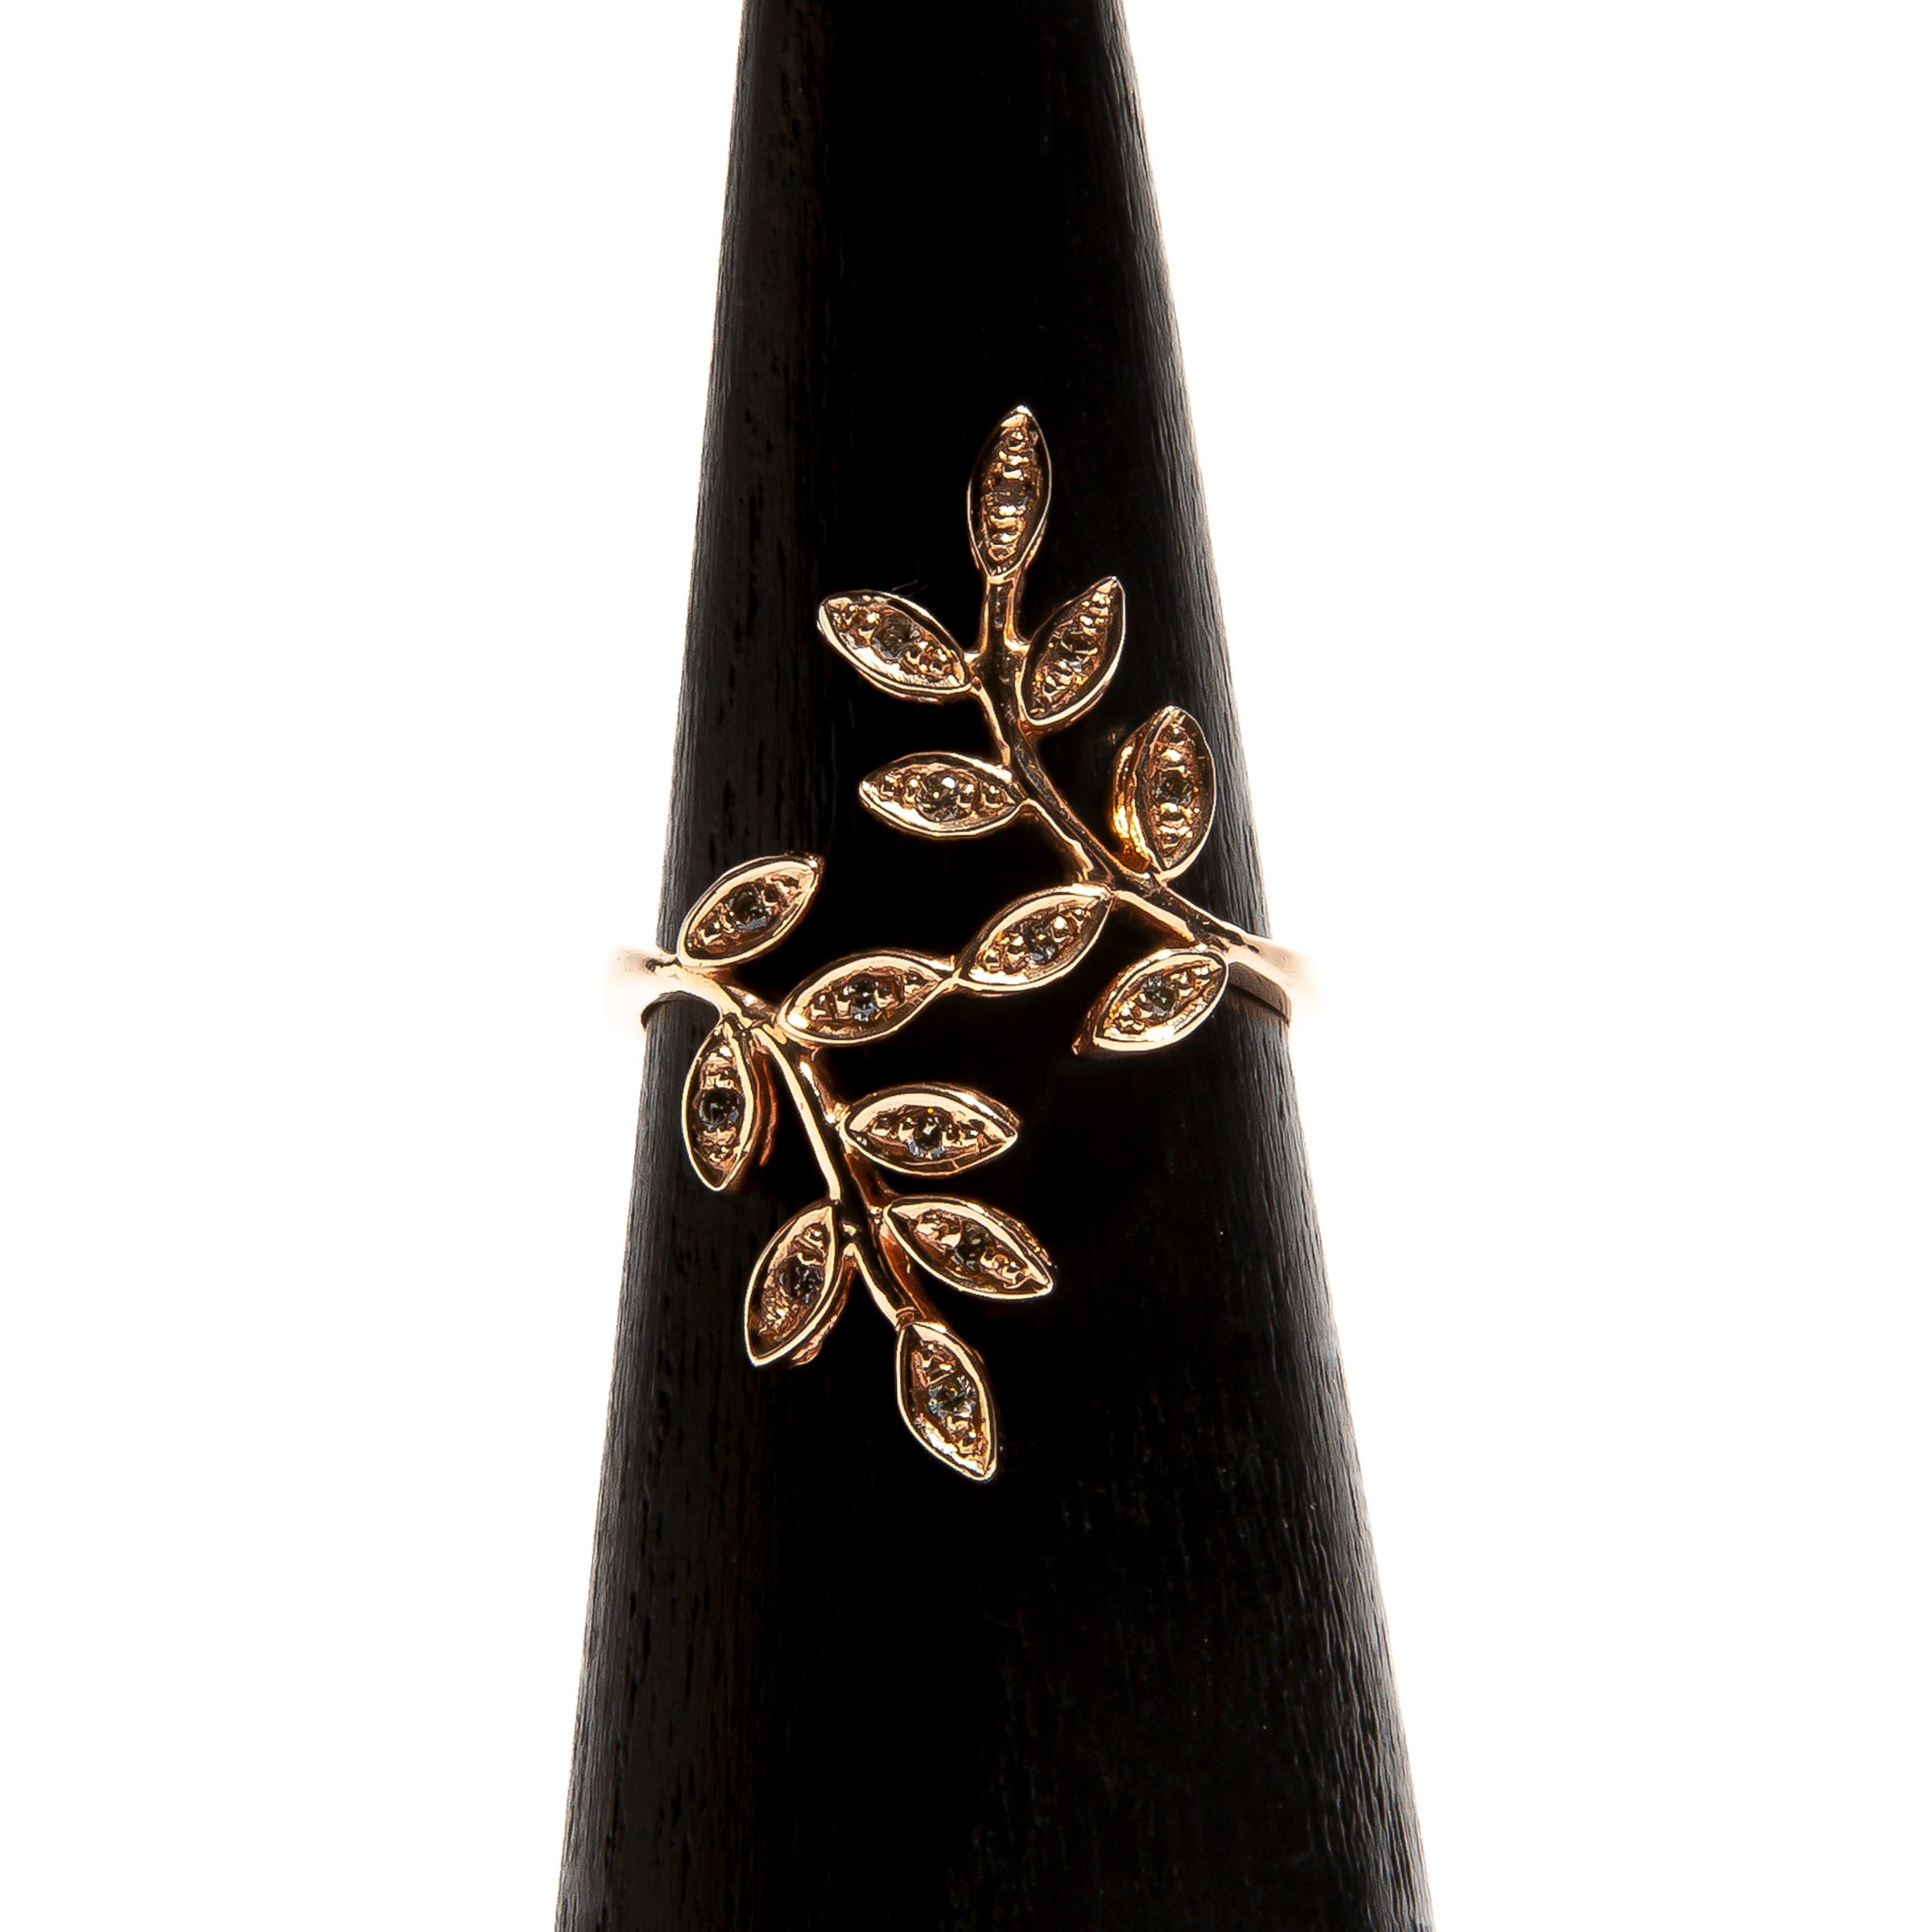 VERONA: Rose Gold Vintage Champagne Diamond Leaf Ring